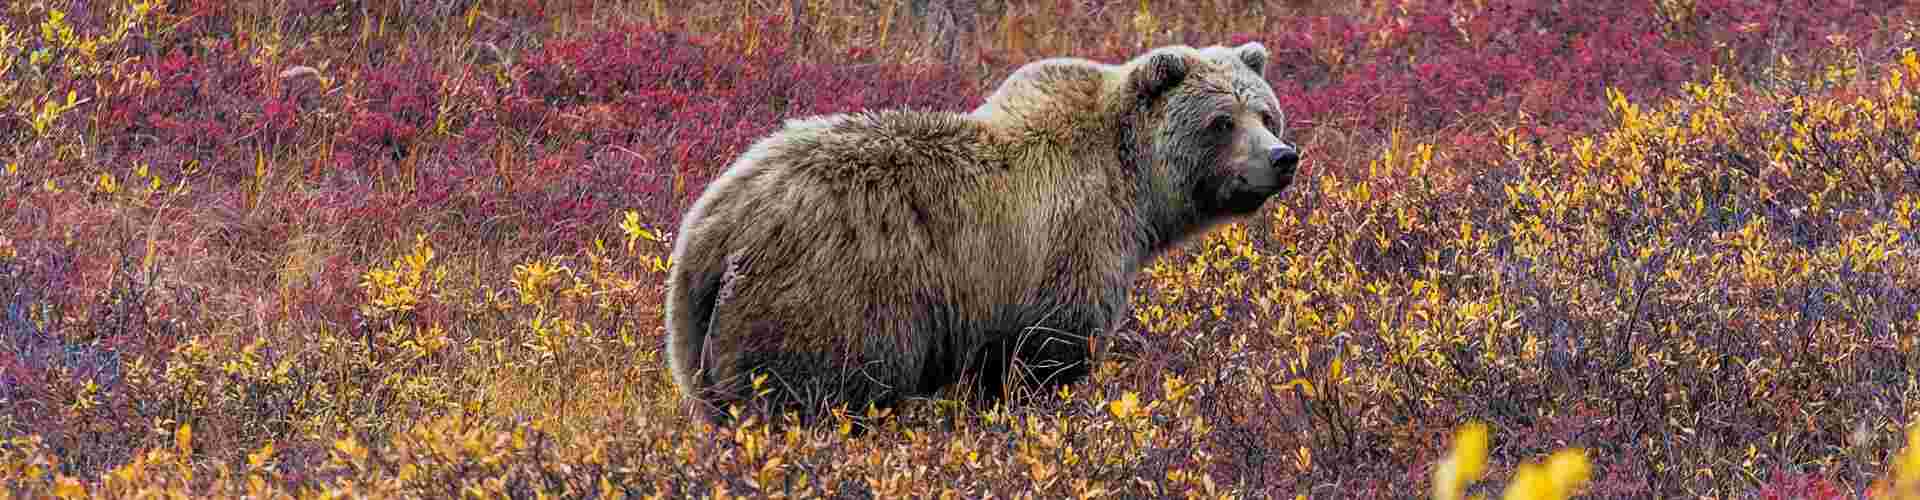 A bear in Denali National Park, Alaska